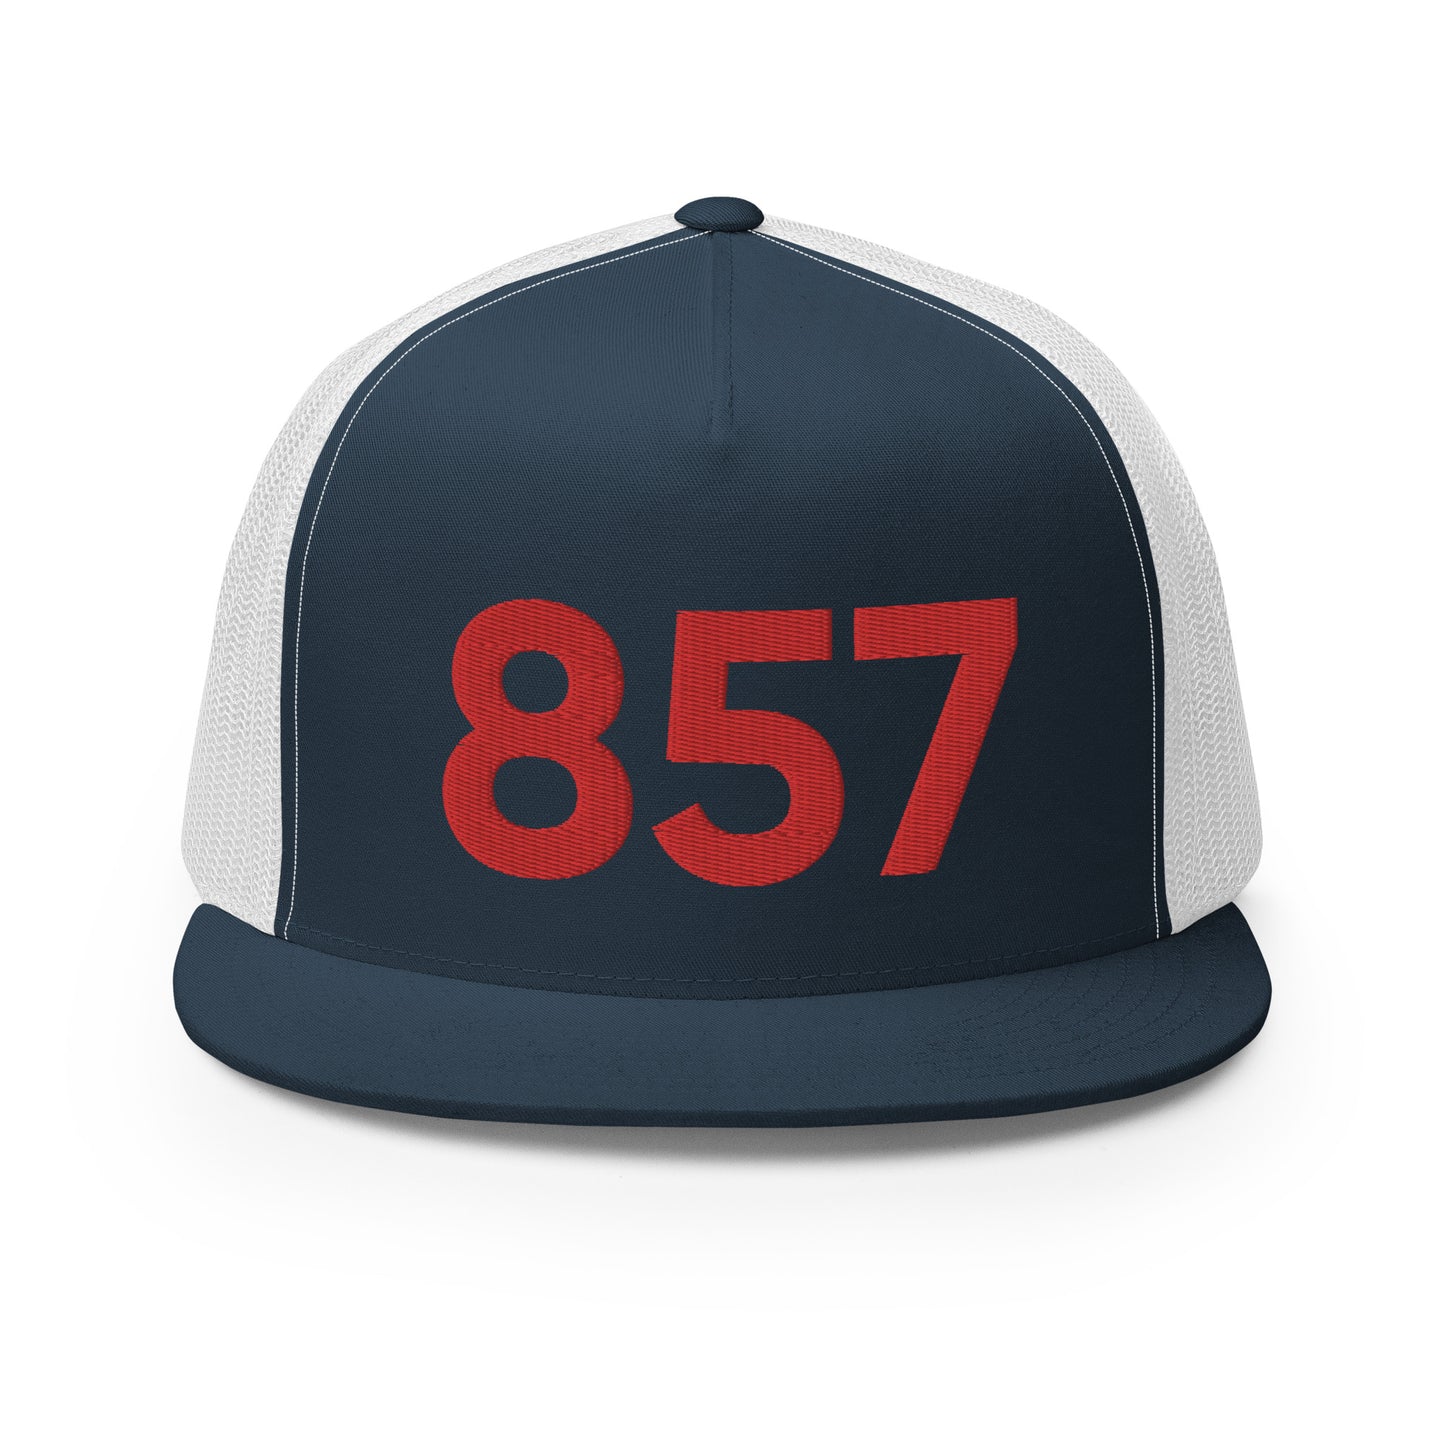 857 Boston Strong Trucker Hat